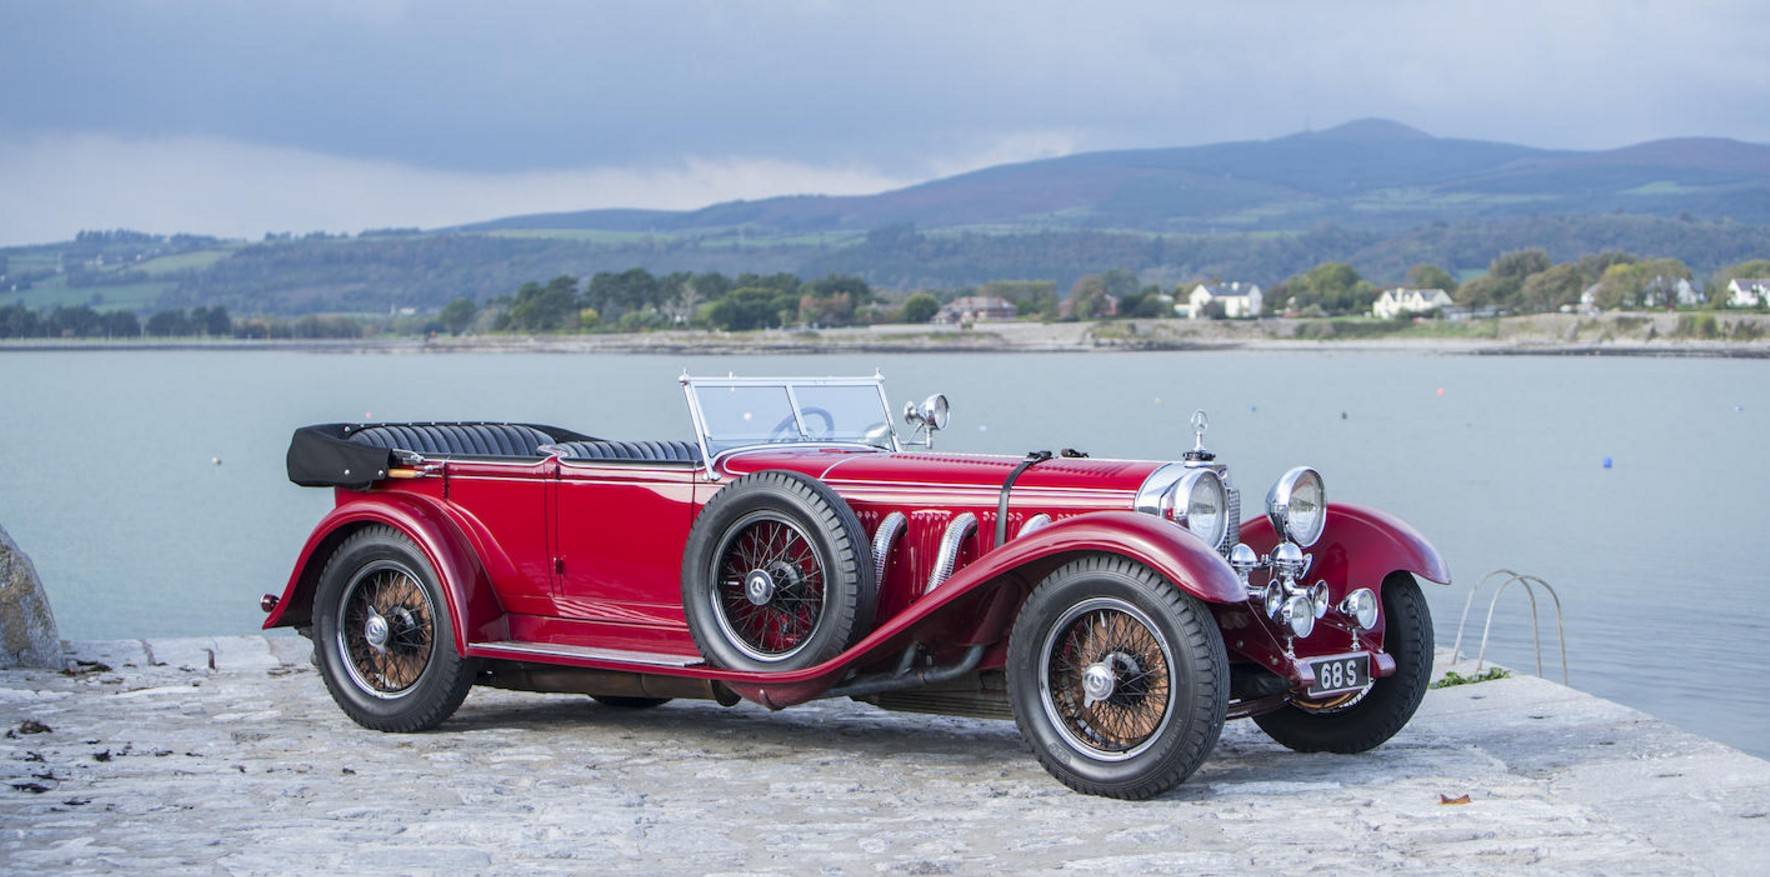 alt="1928 Mercedes-Benz S-Type 26/120/180 Sports Tourer"